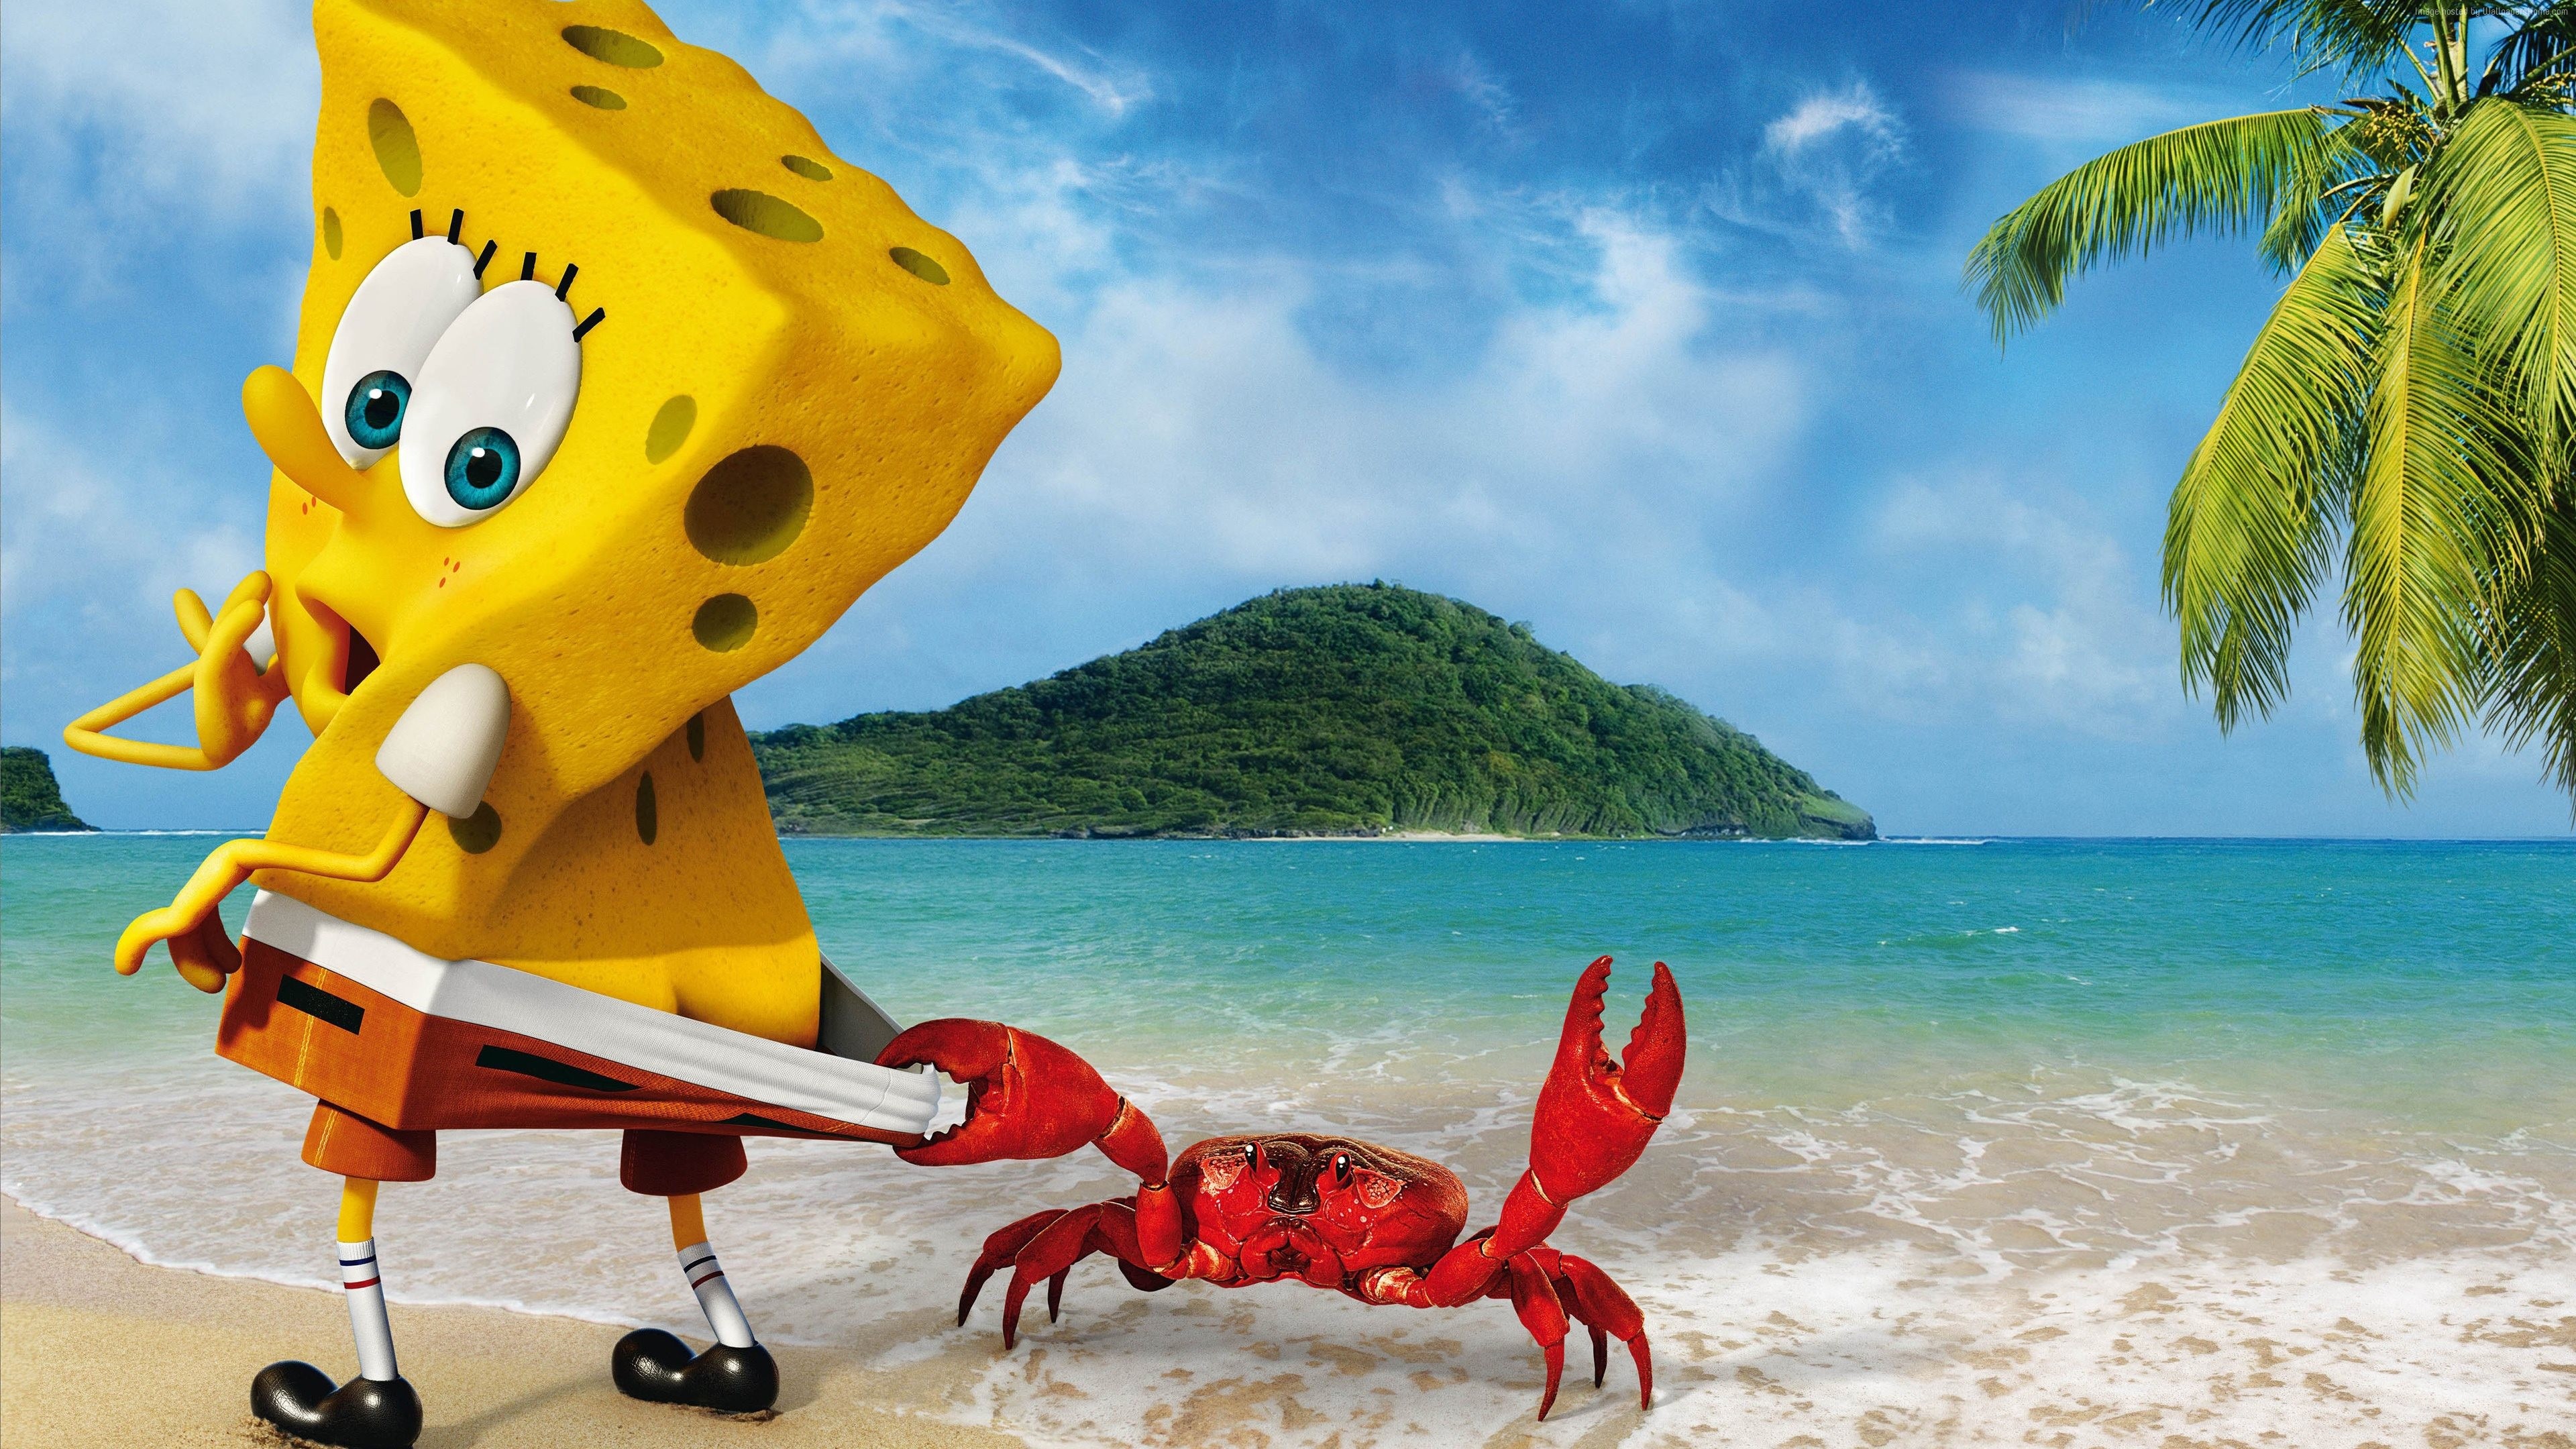 The SpongeBob Movie: Sponge Out of Water Wallpaper, Movies ...